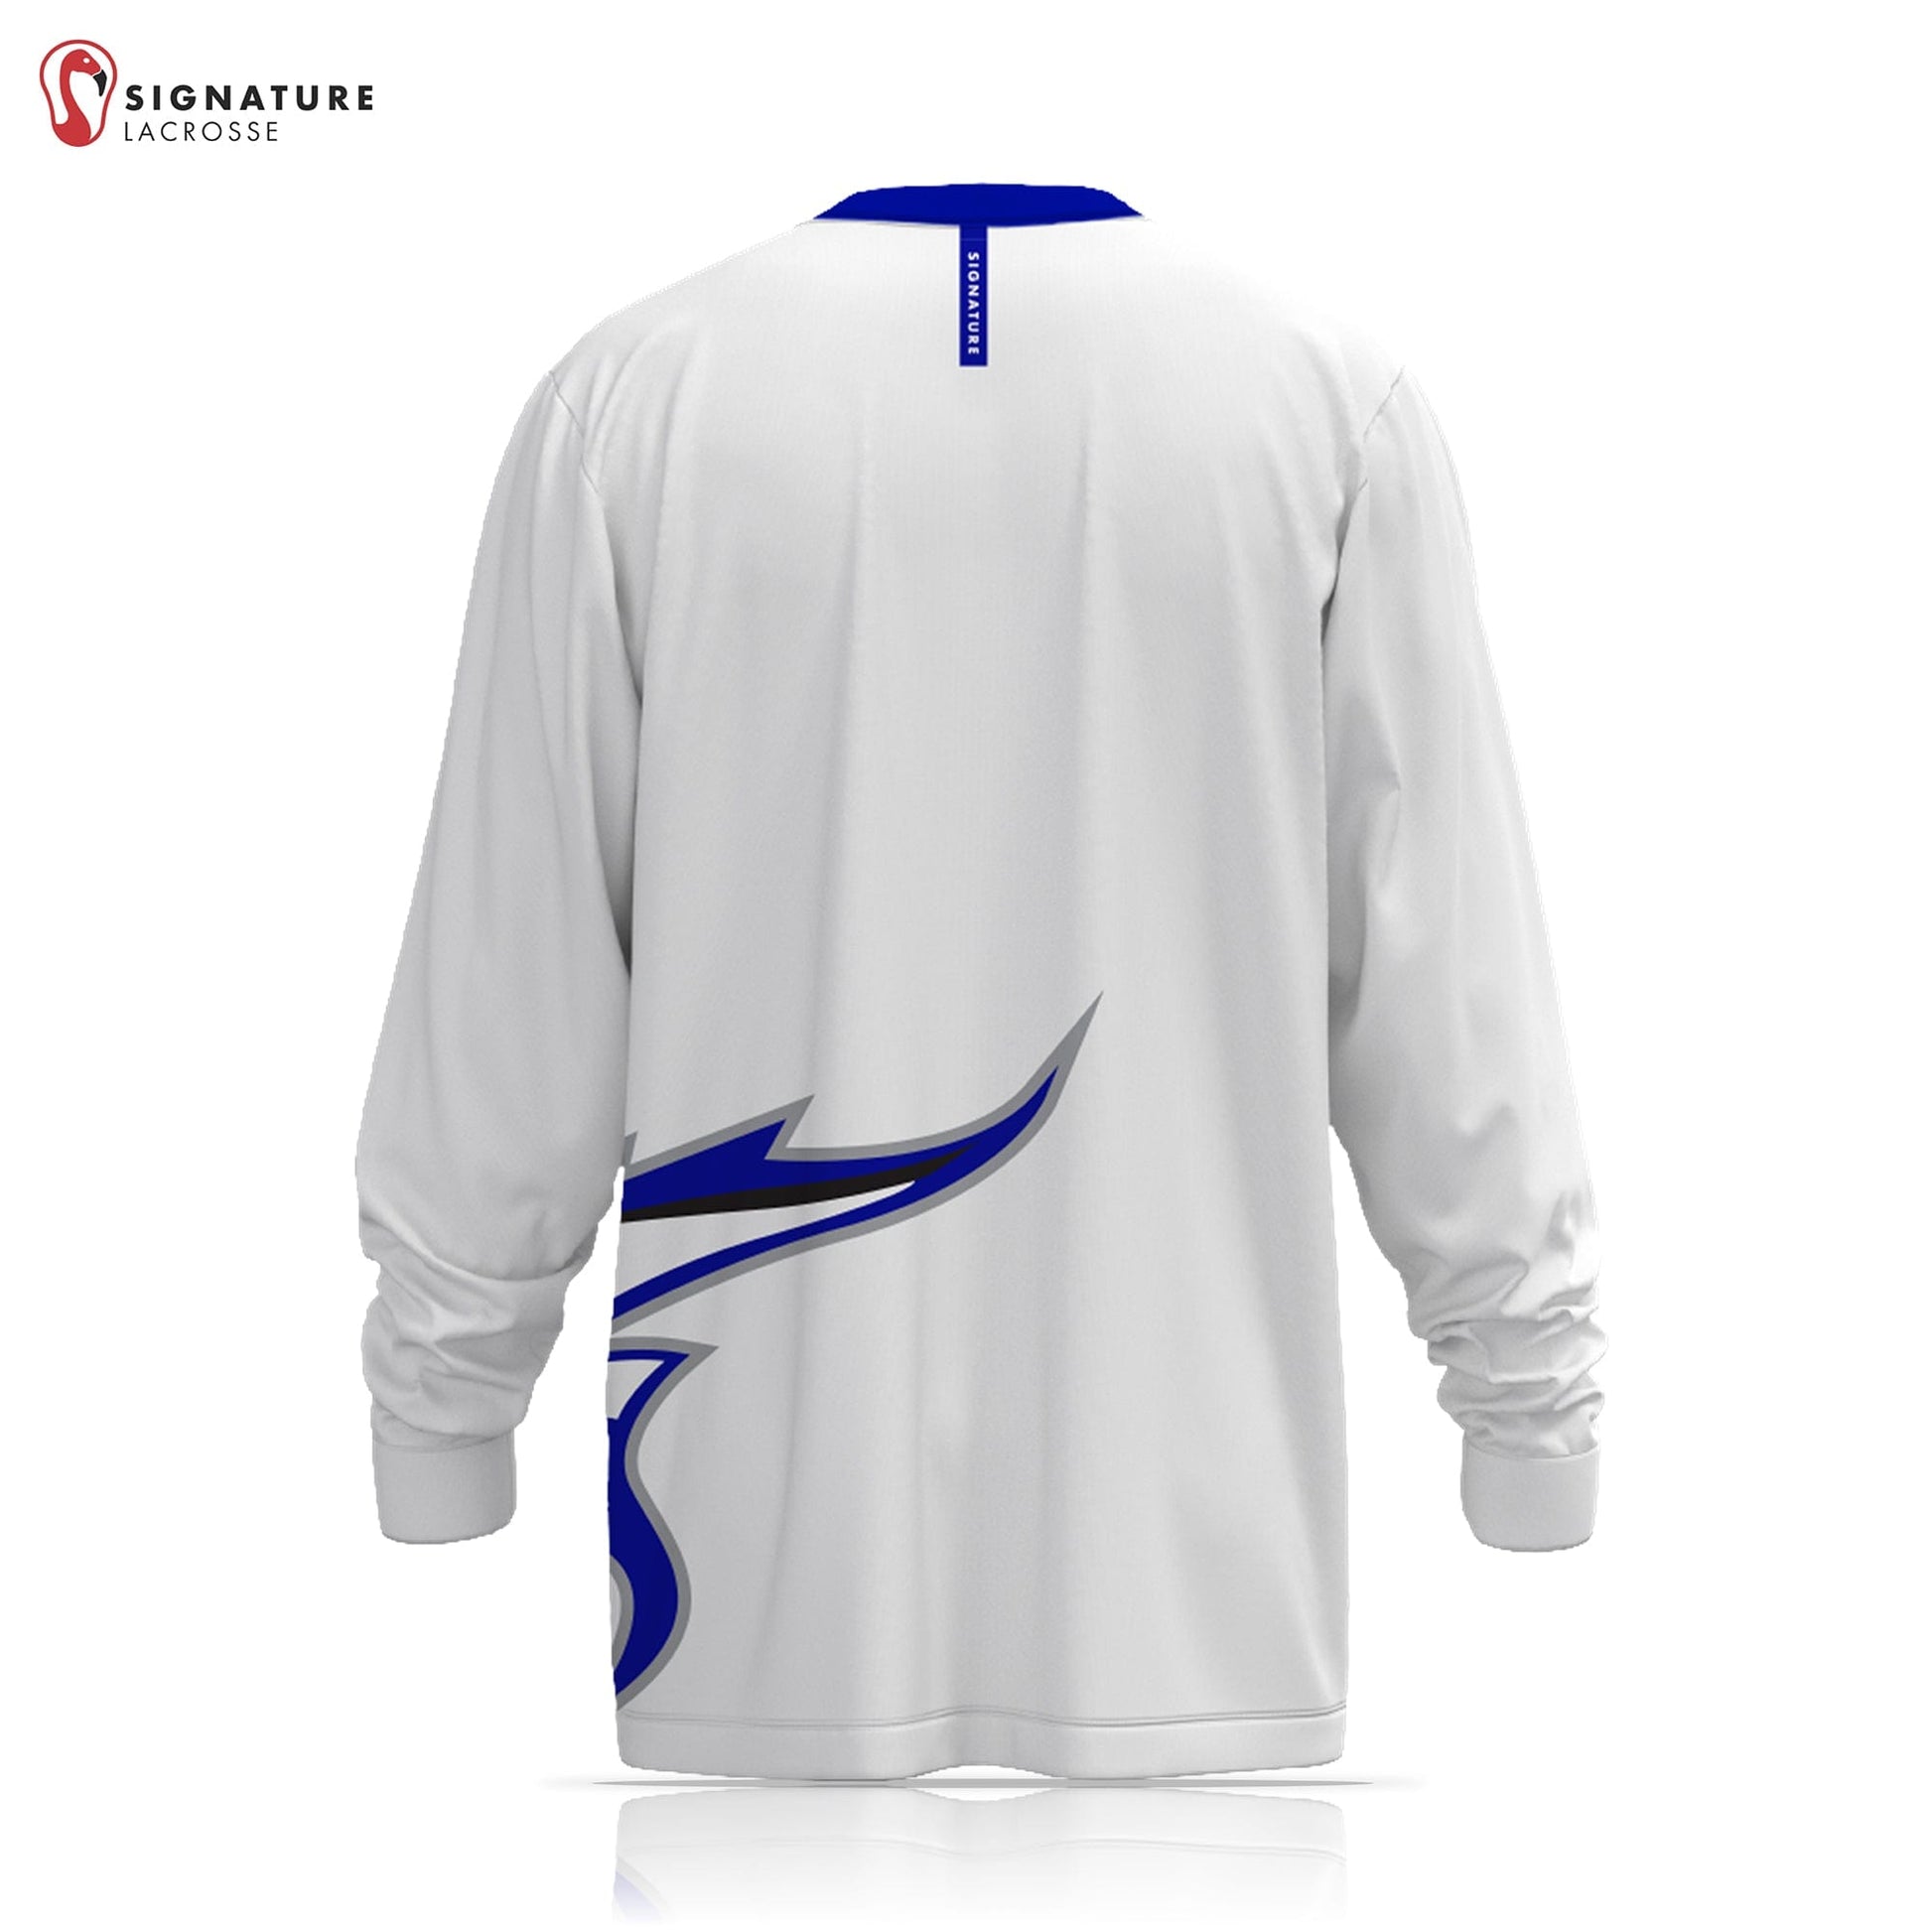 Highlands Ranch High School Lacrosse Men’s Long Sleeve Shooting Shirt Signature Lacrosse